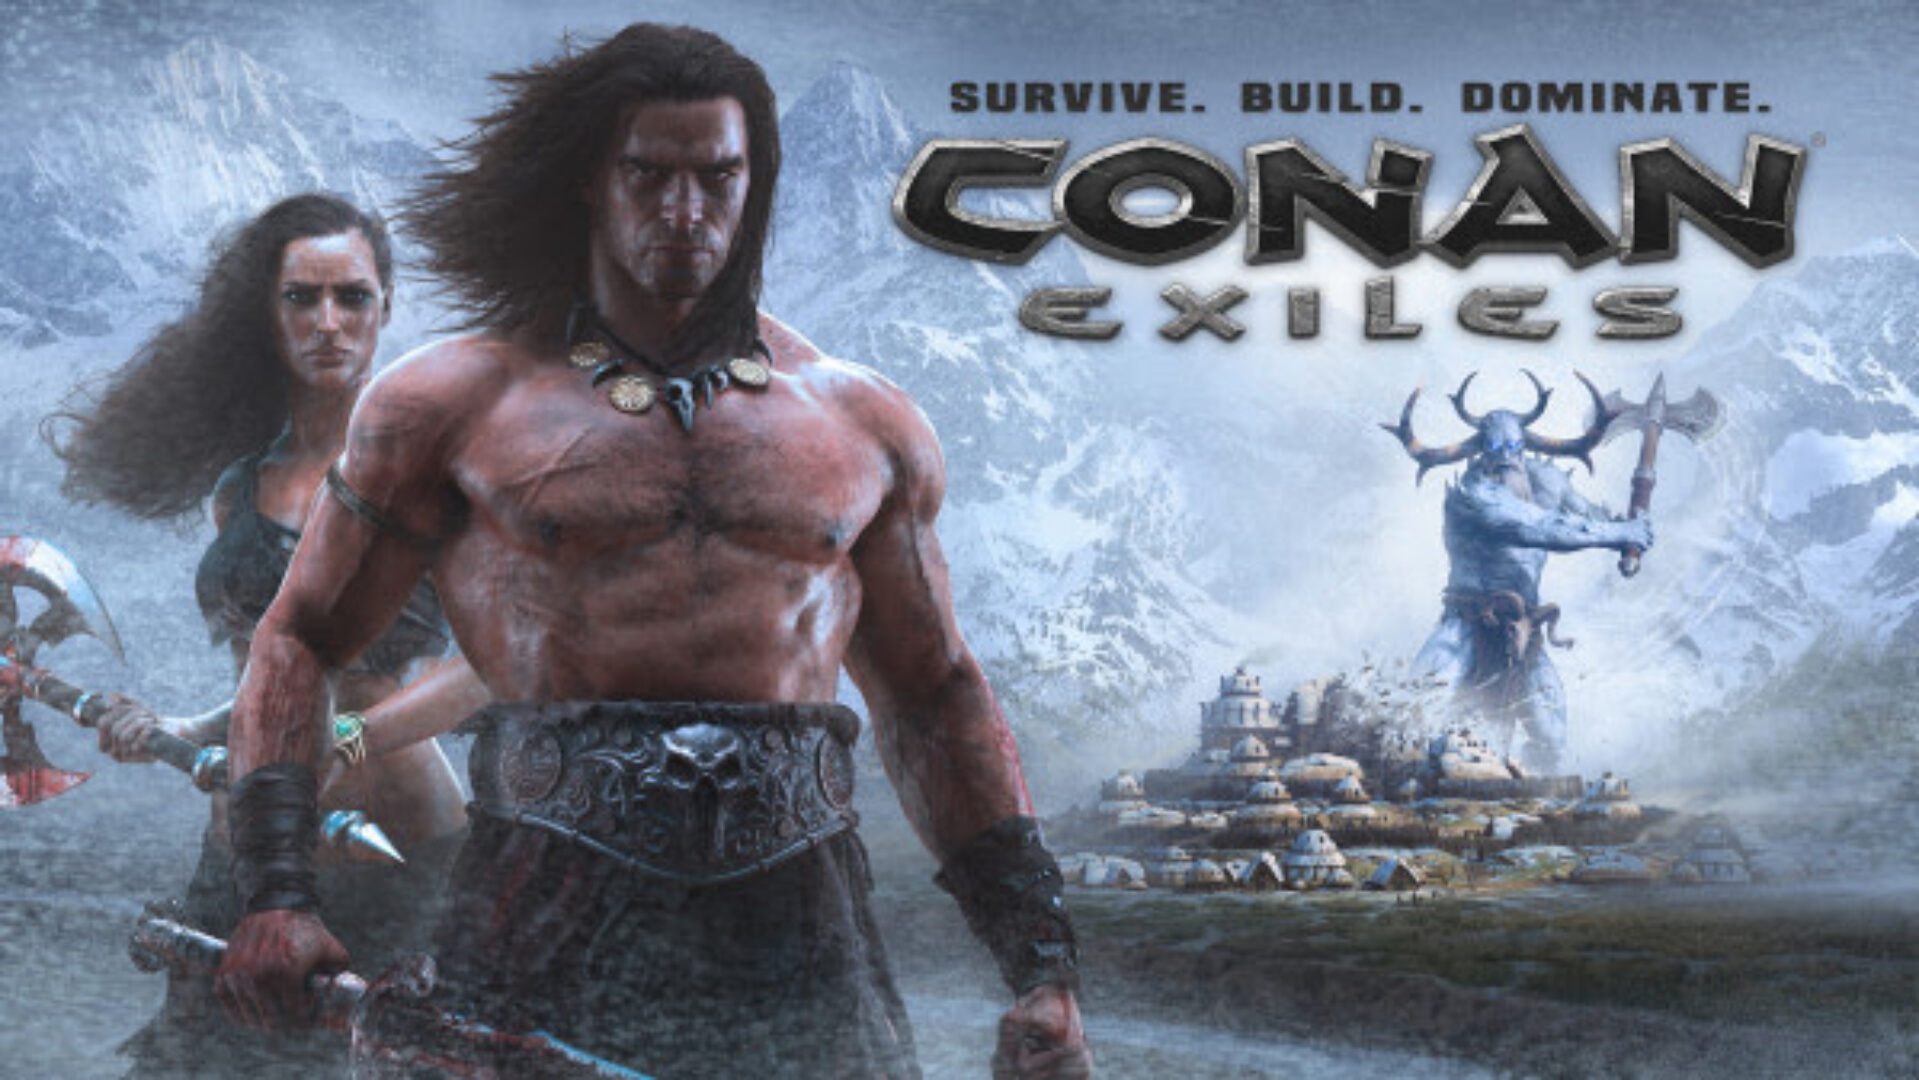 Conan Exiles Launches on Xbox Game Preview Tomorrow